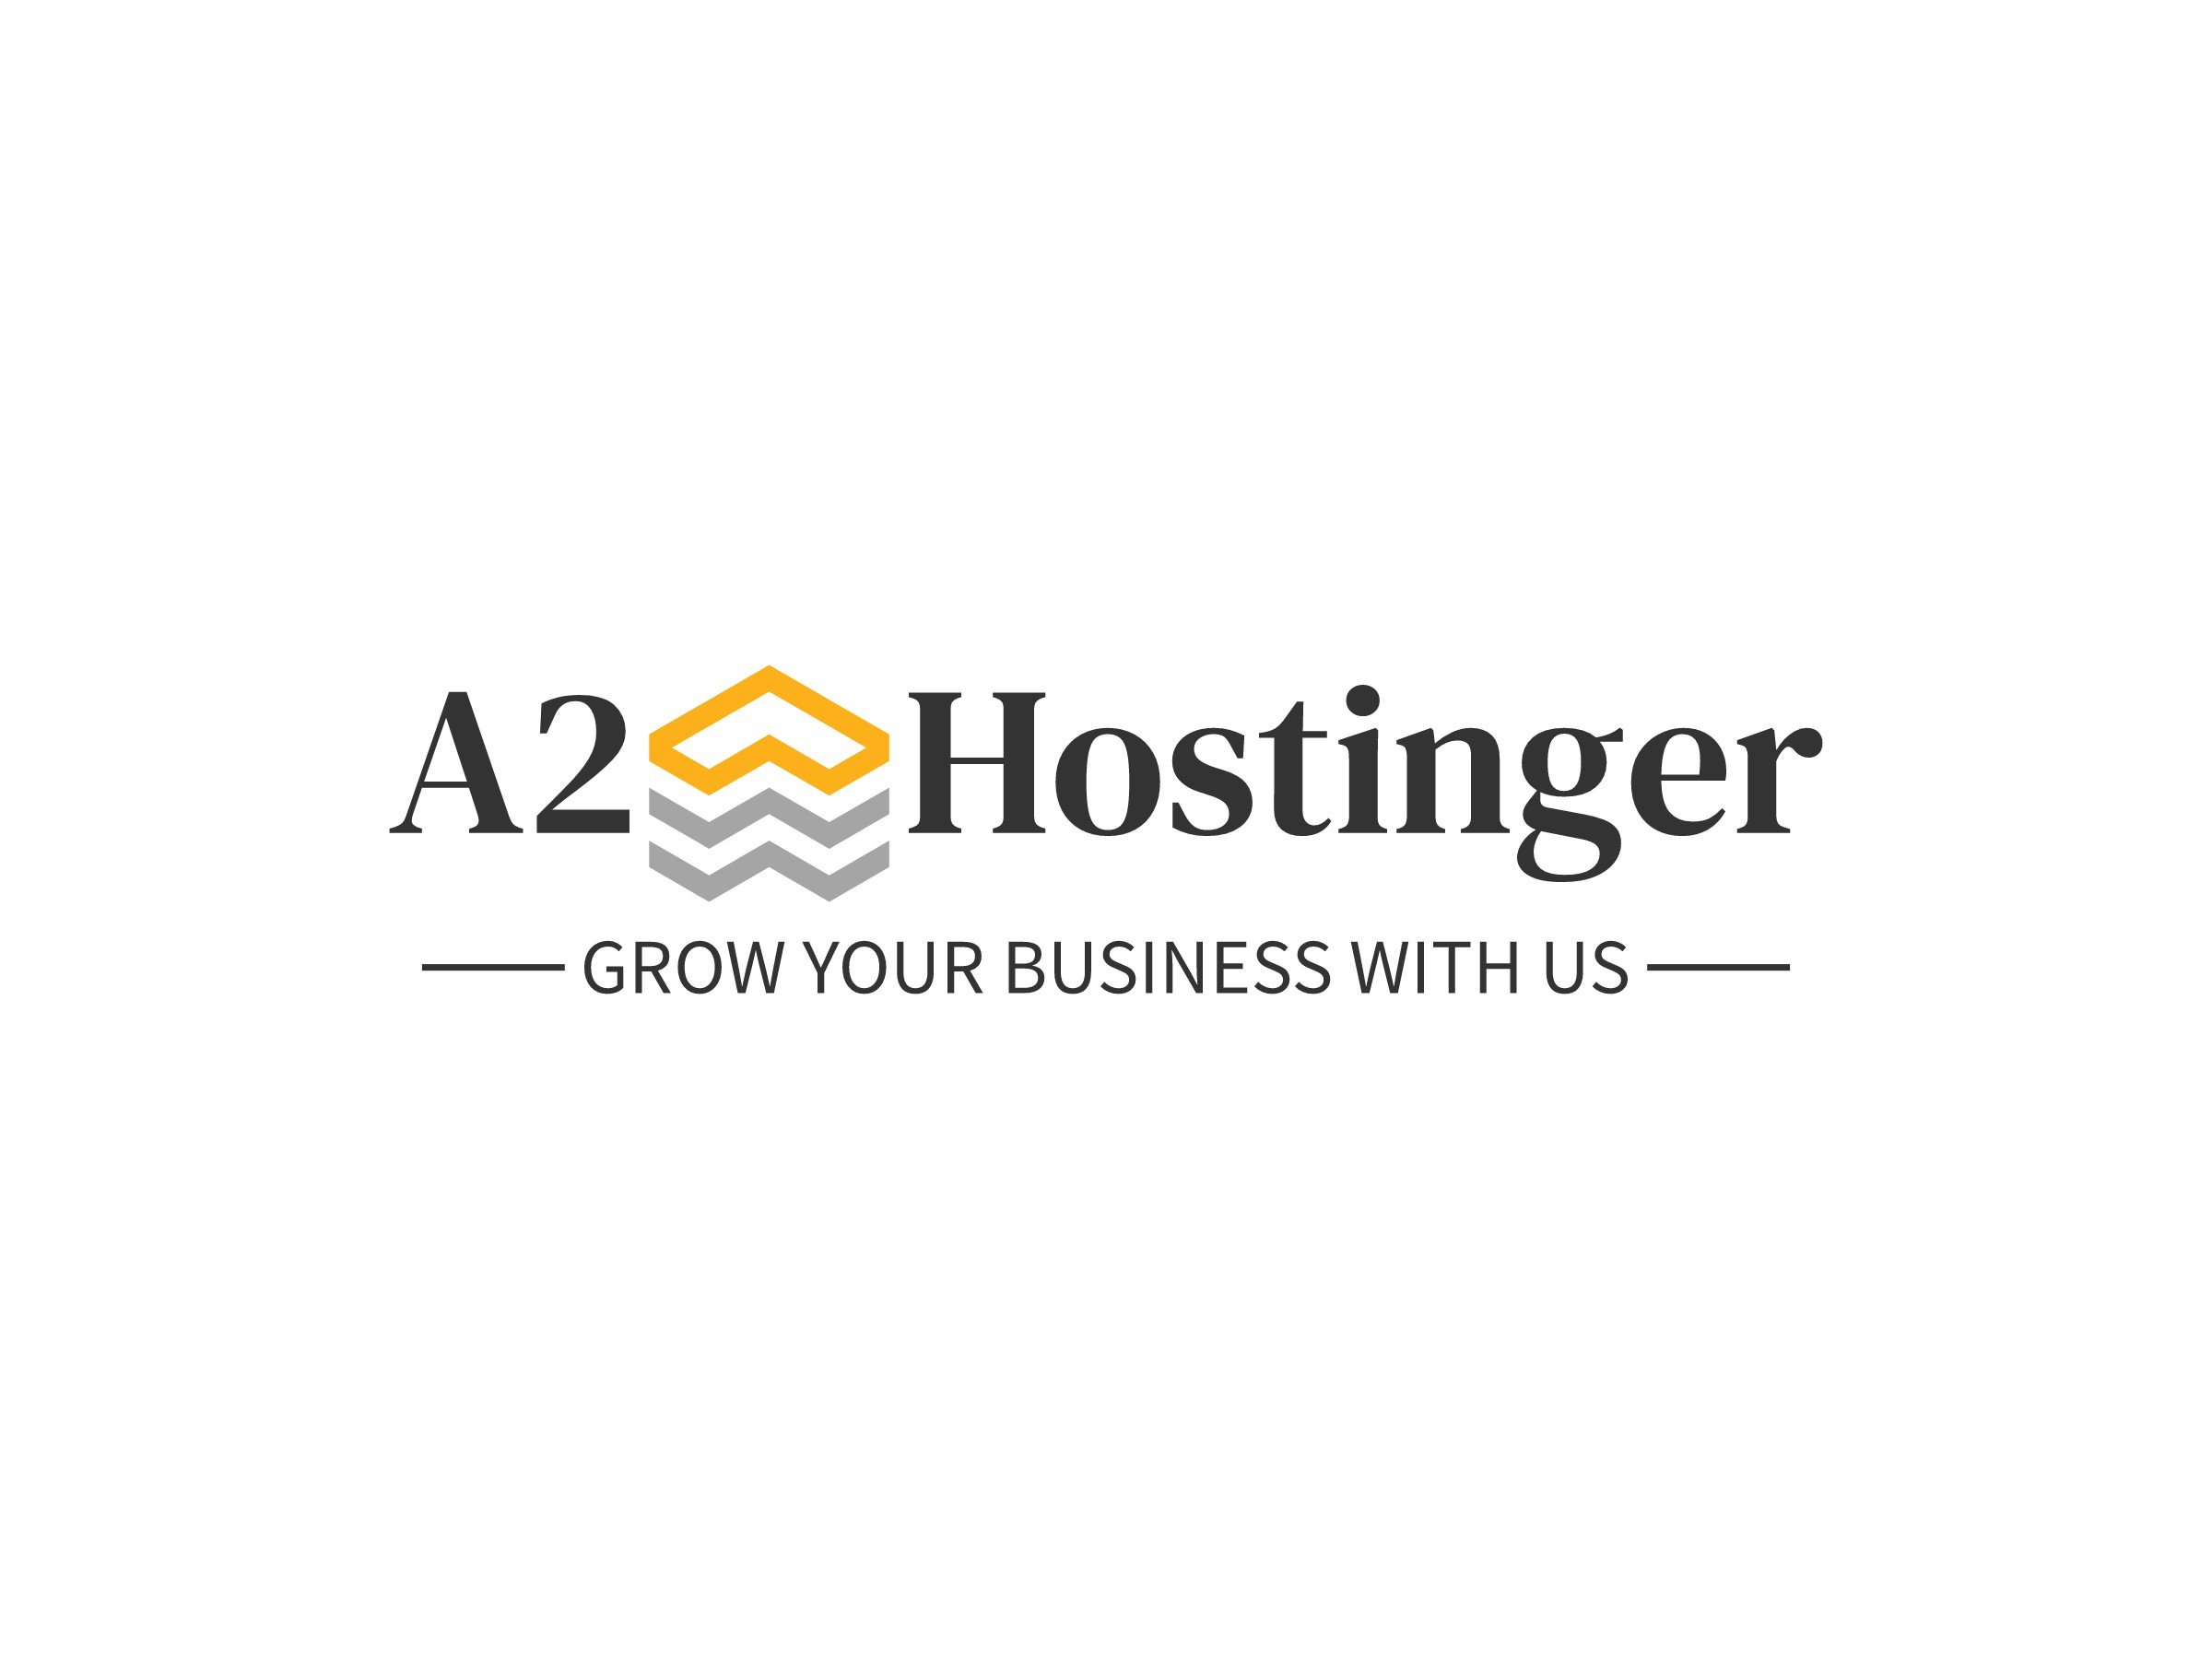 A2 Hostinger logo design